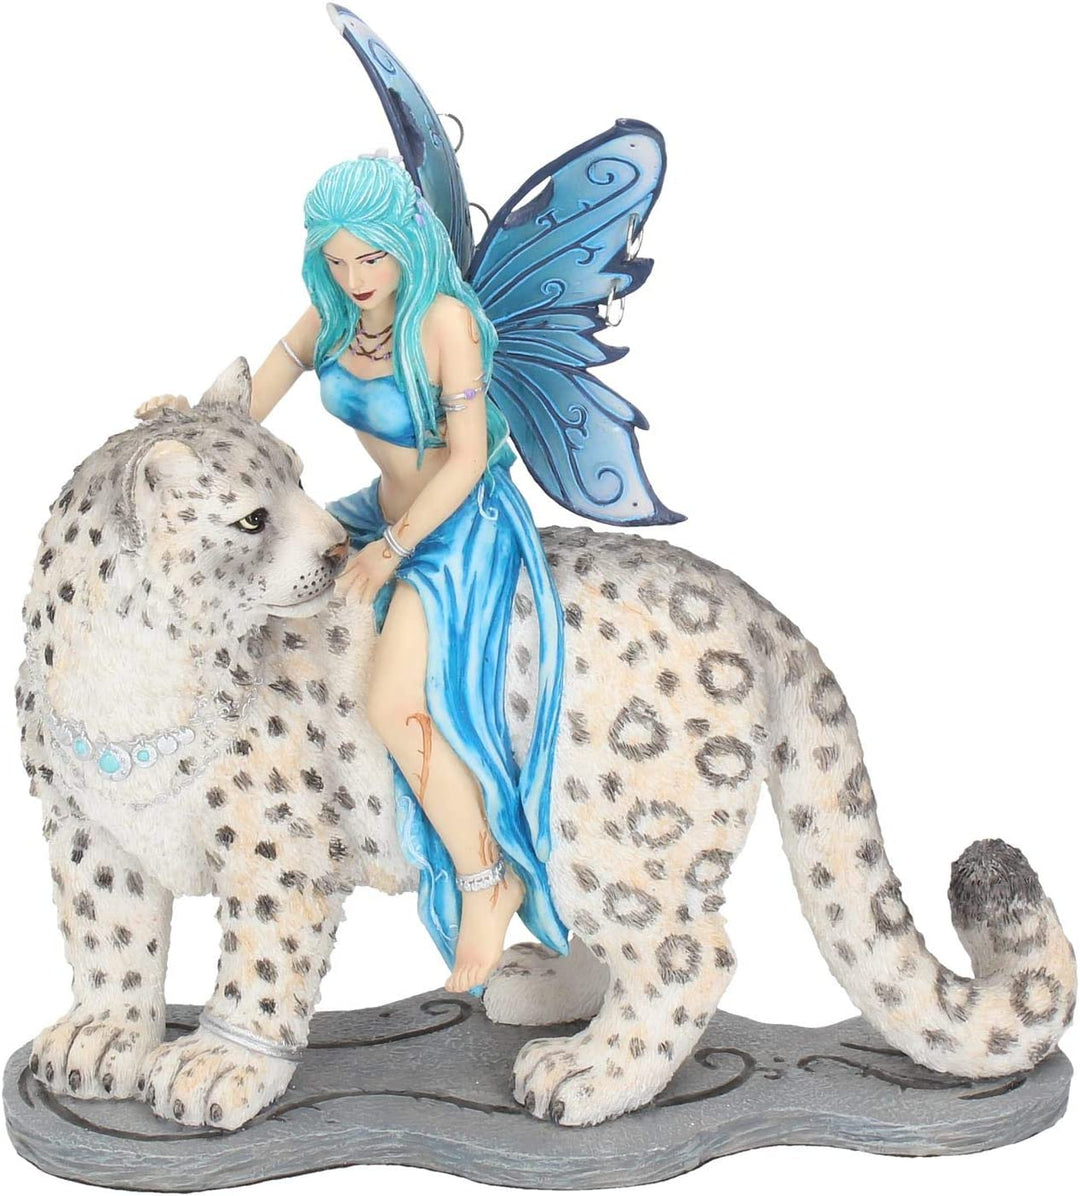 Nemesis Now B1937F6 Hima Companion Fairy Figur, 26 cm, Blau